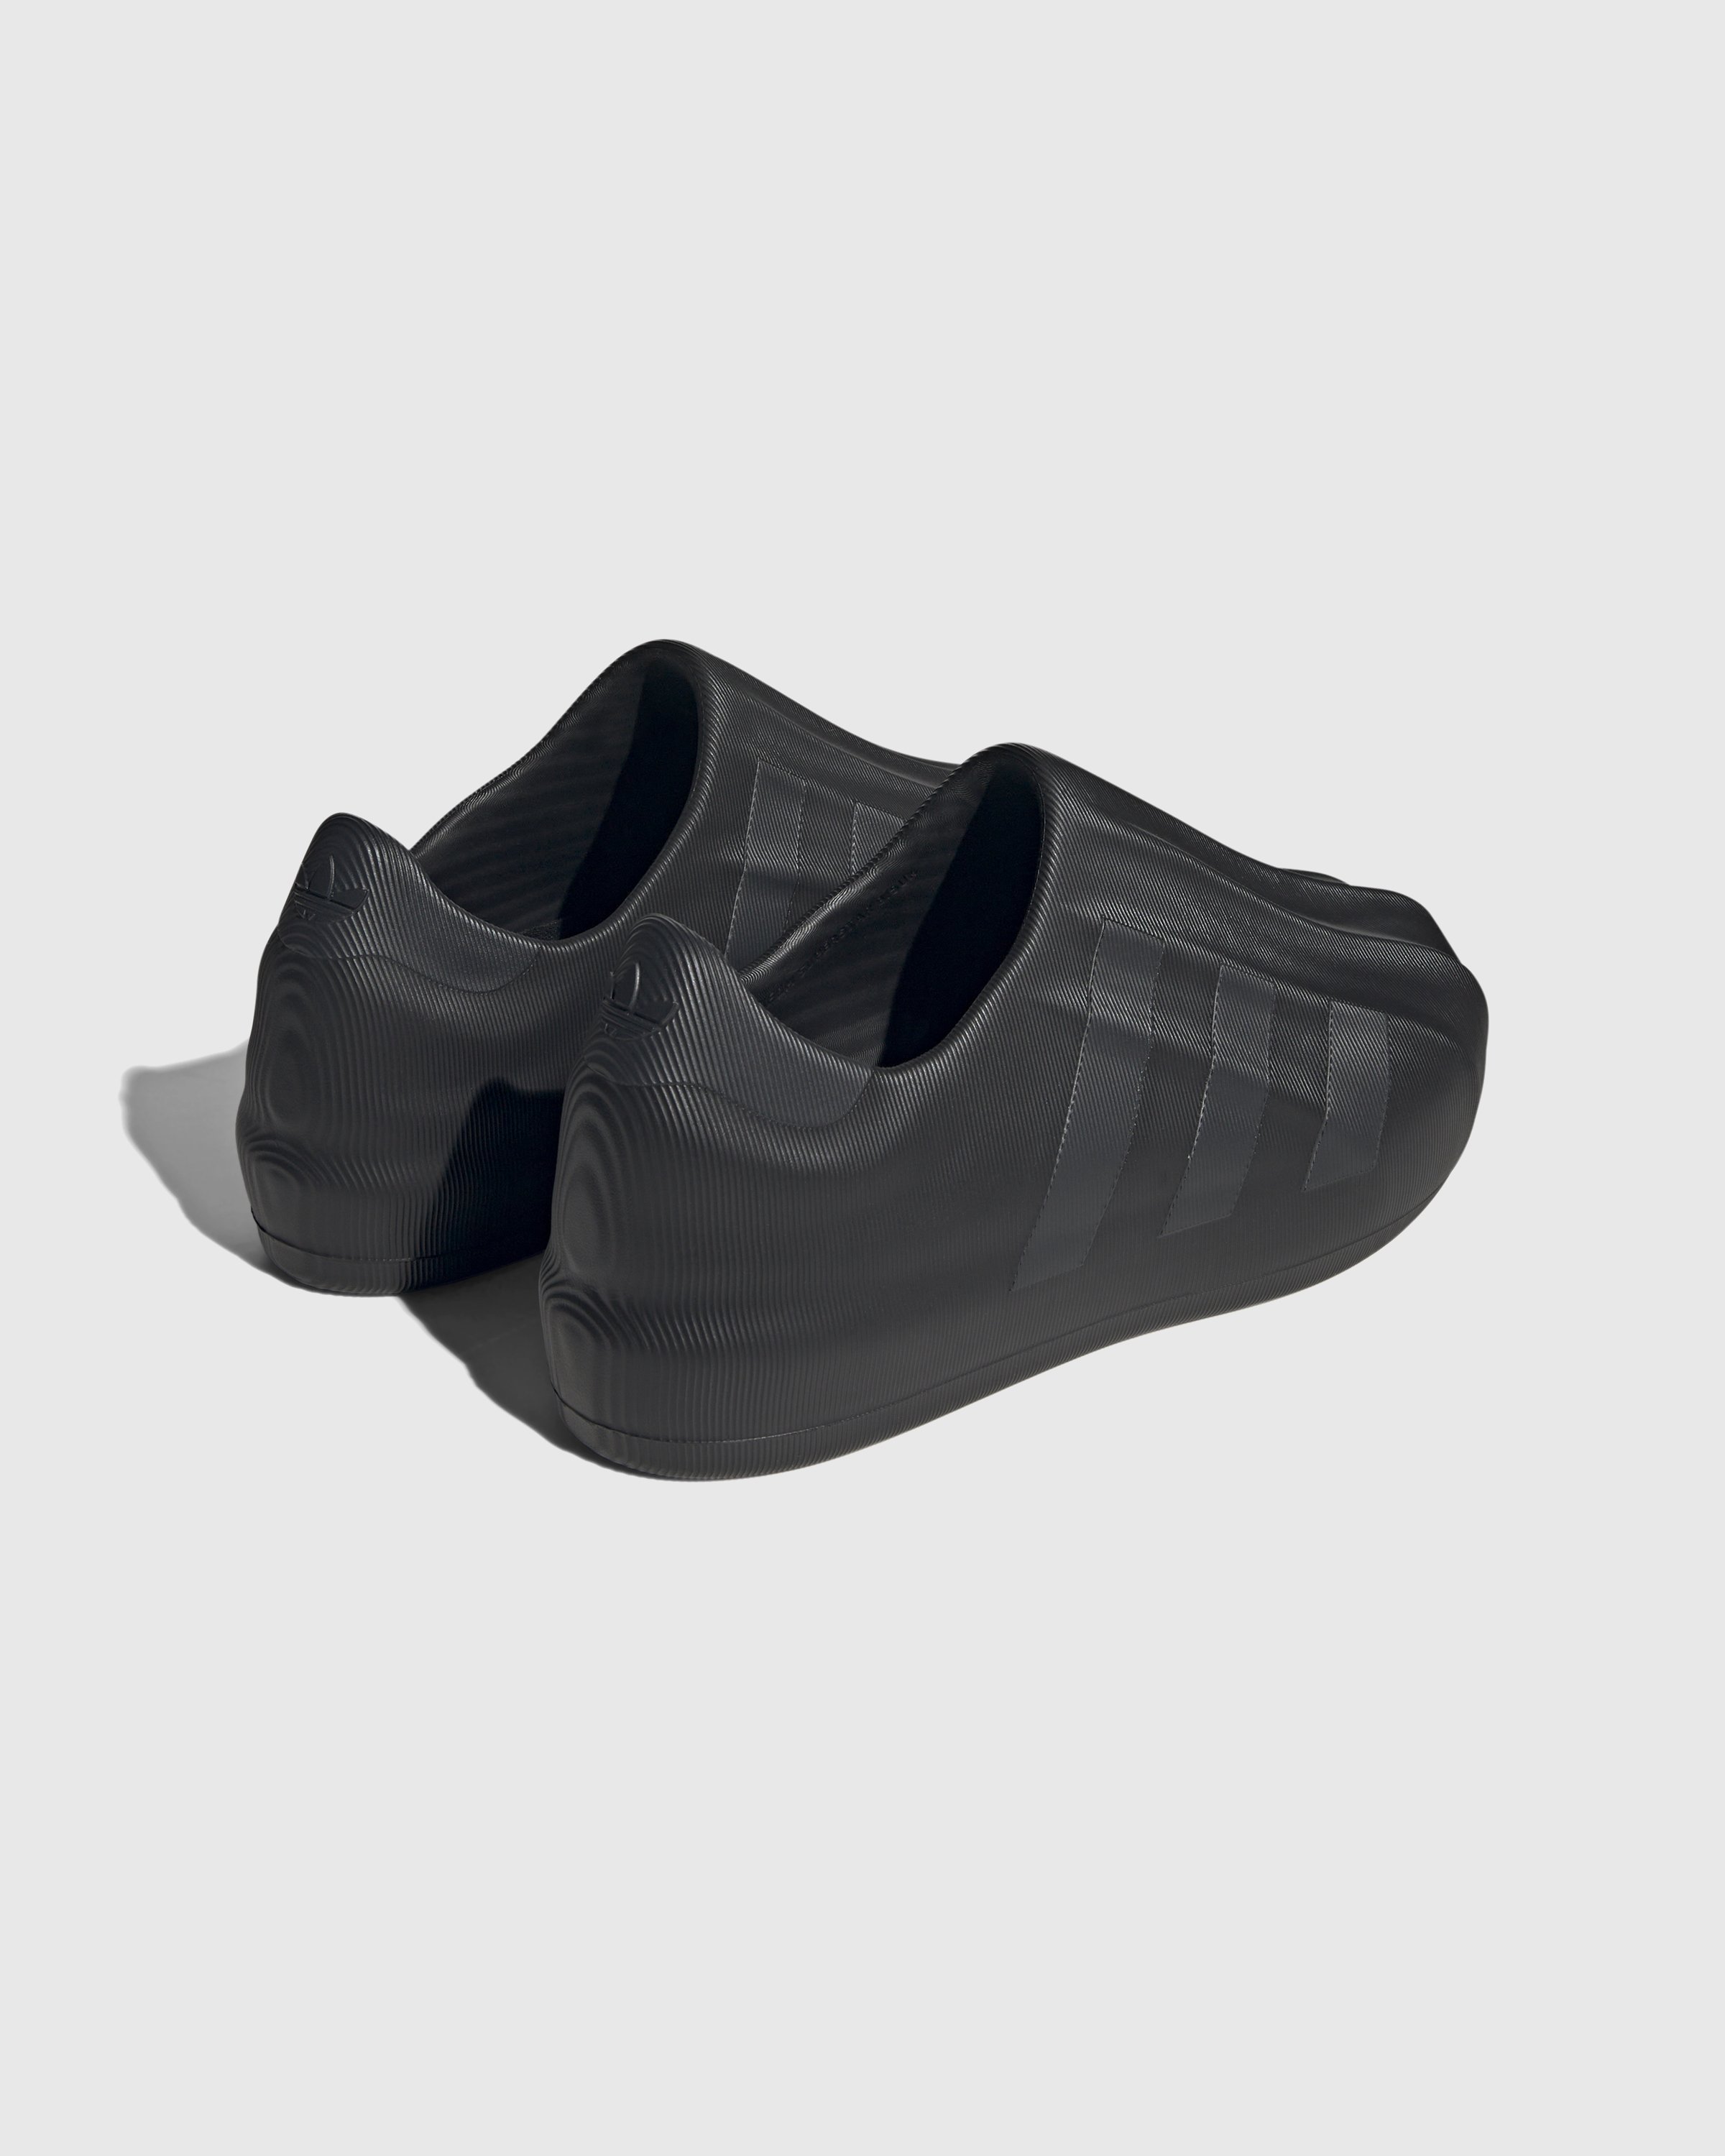 Adidas - Adifom Superstar Black Carbon - Footwear - Black - Image 3